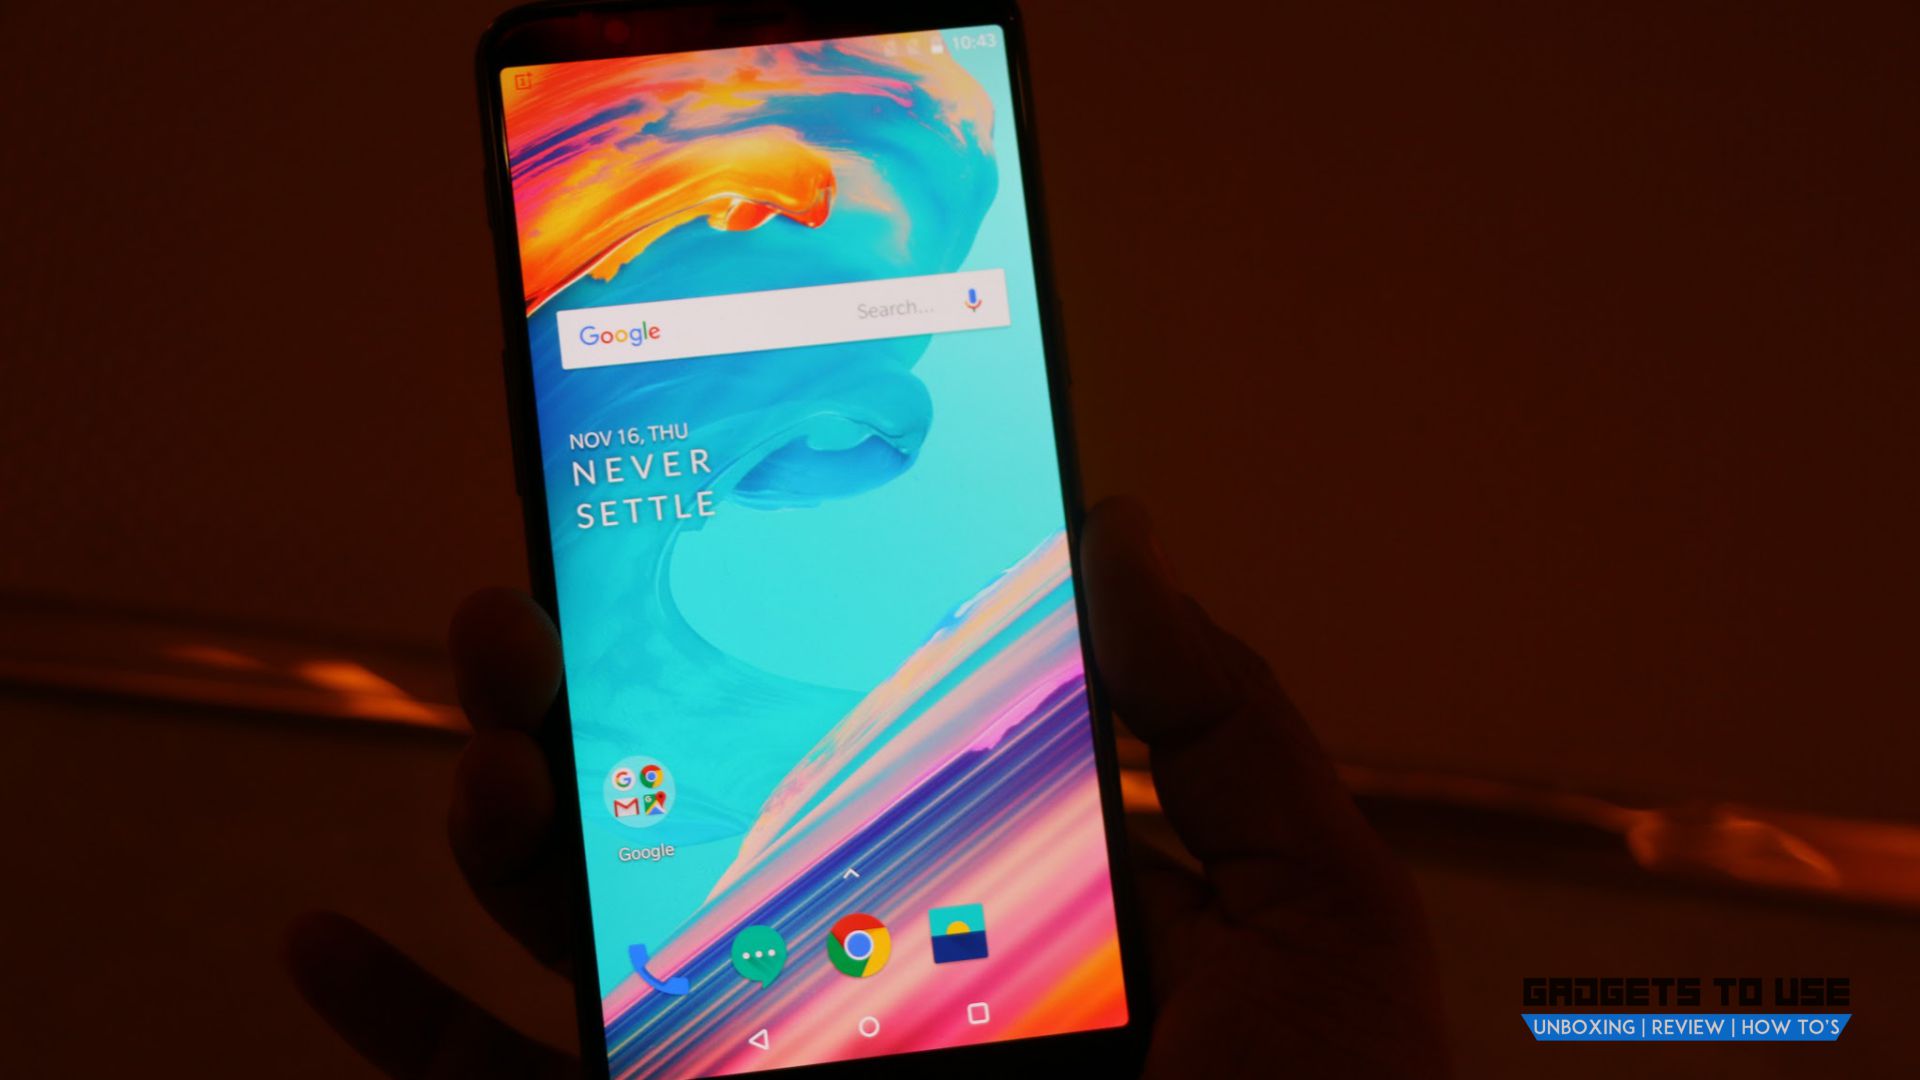 OnePlus 5T display